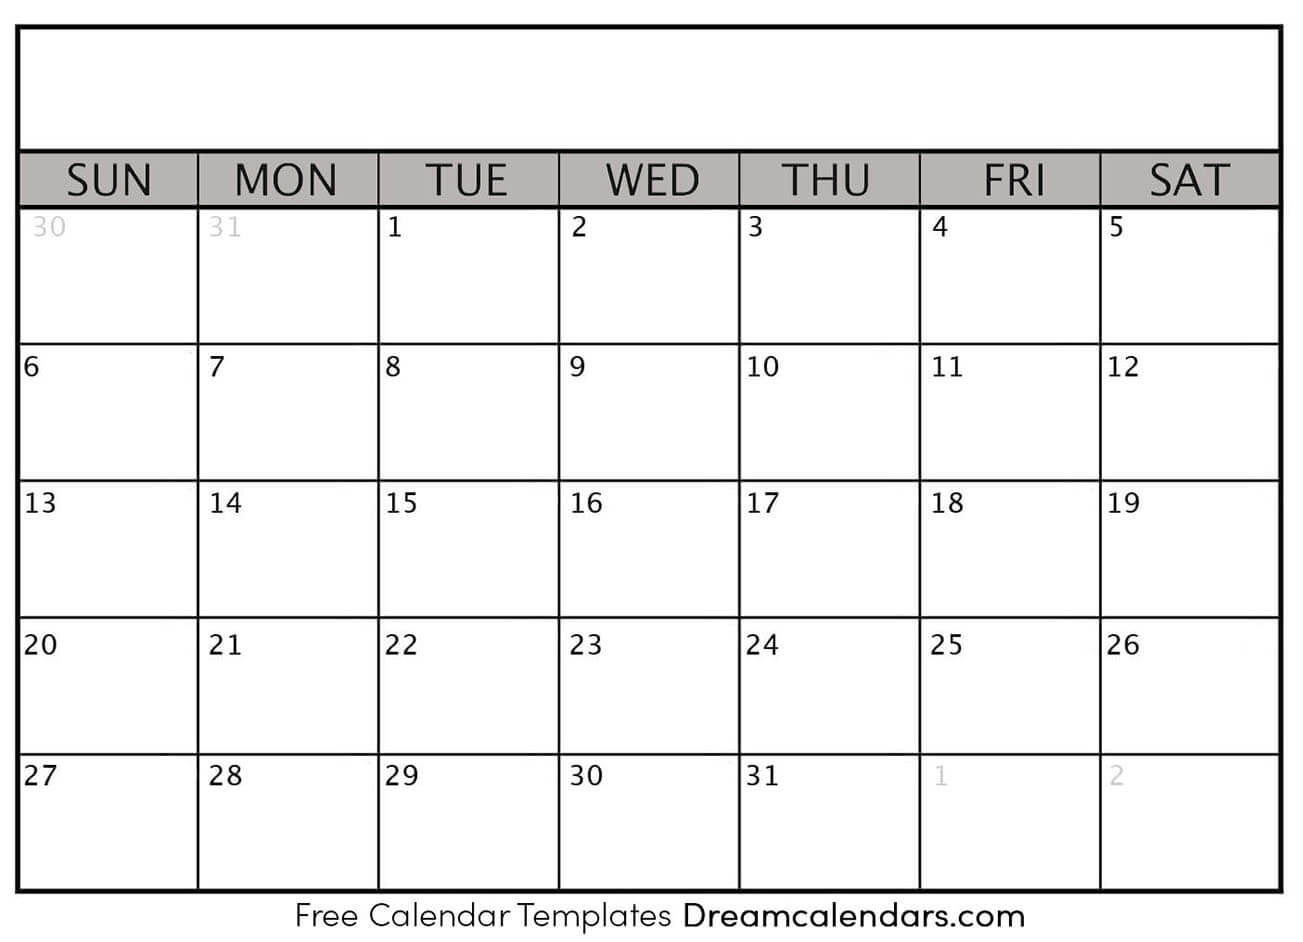 dreamcalendars / print / issues / #24 - Printable Blank Calendar Regarding Blank Calender Template